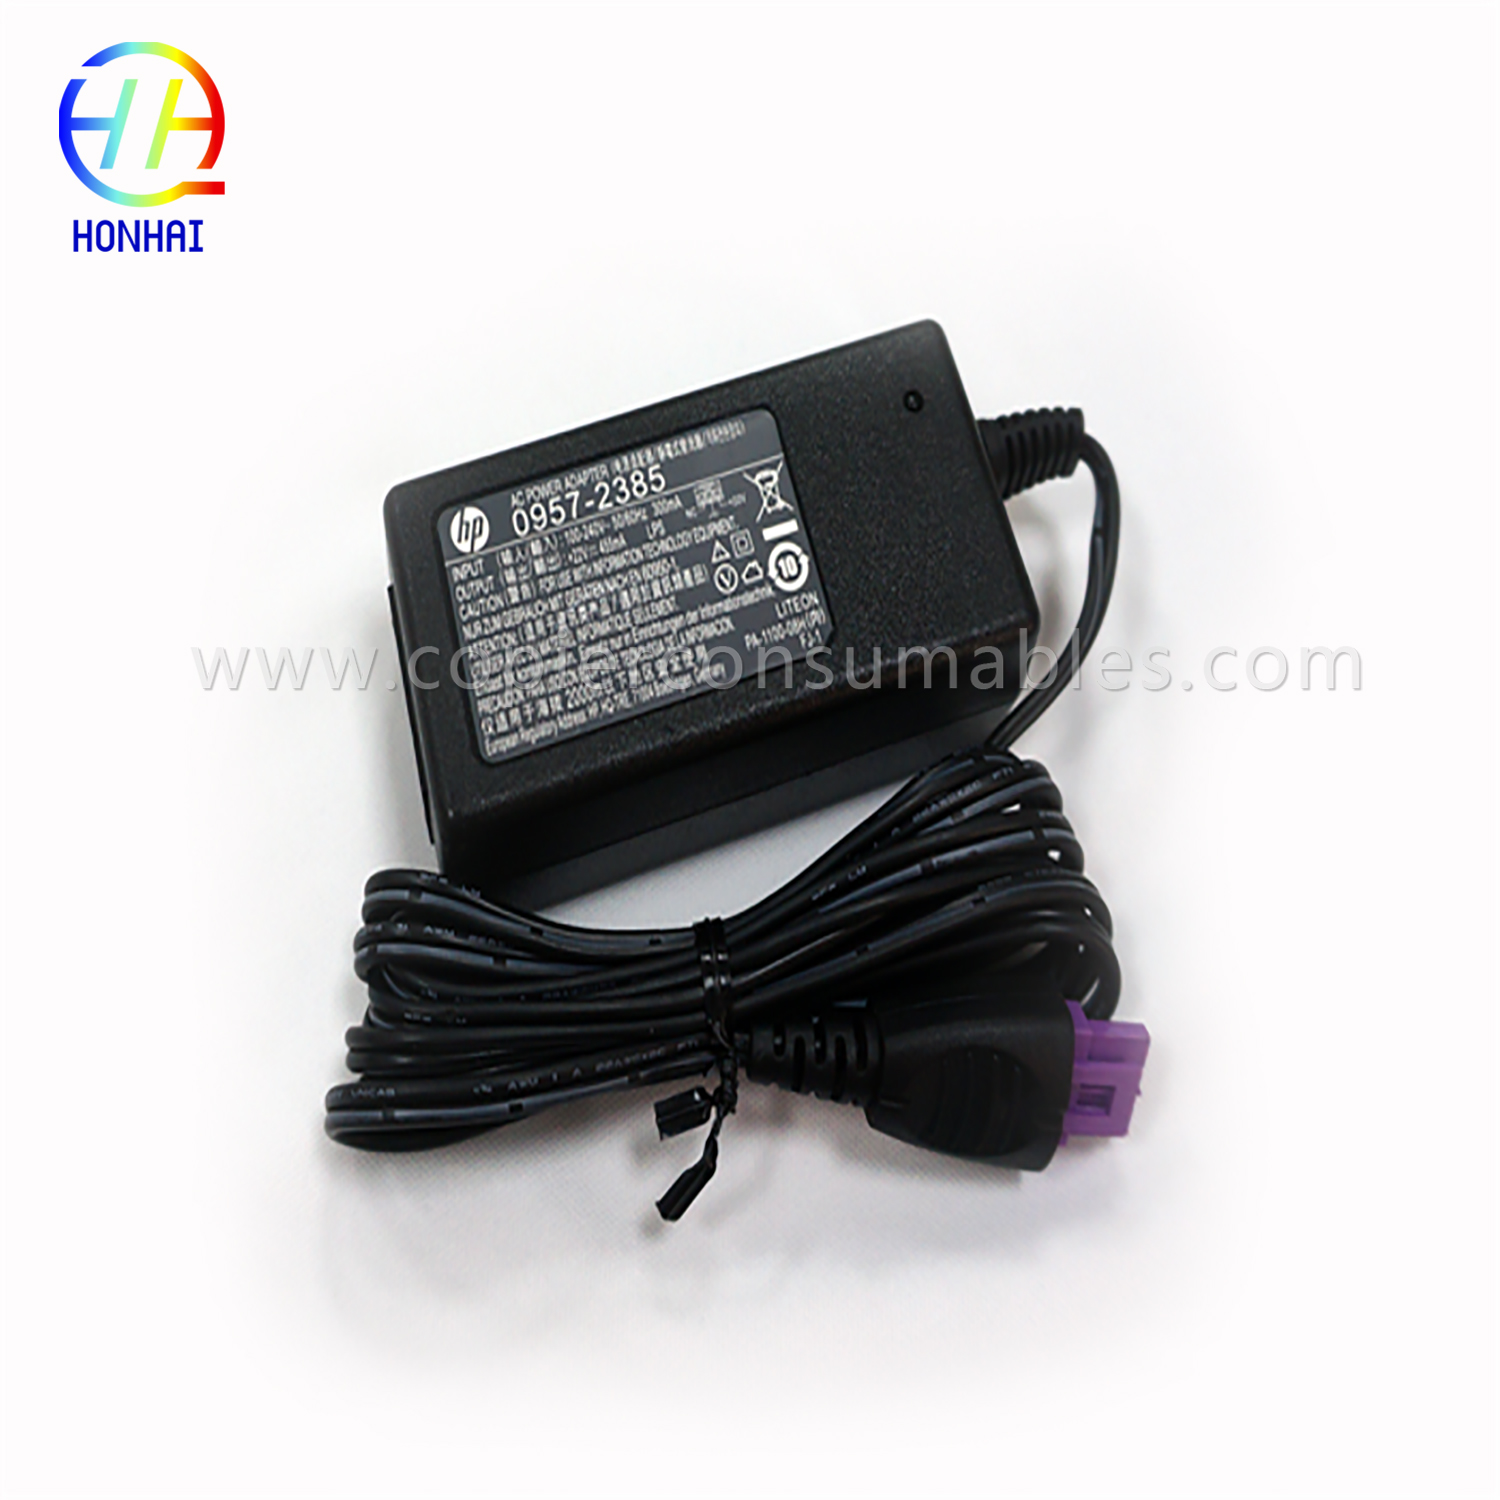 Toiteadapter HP 1010 1510 1518-3 22v拷贝 (1)